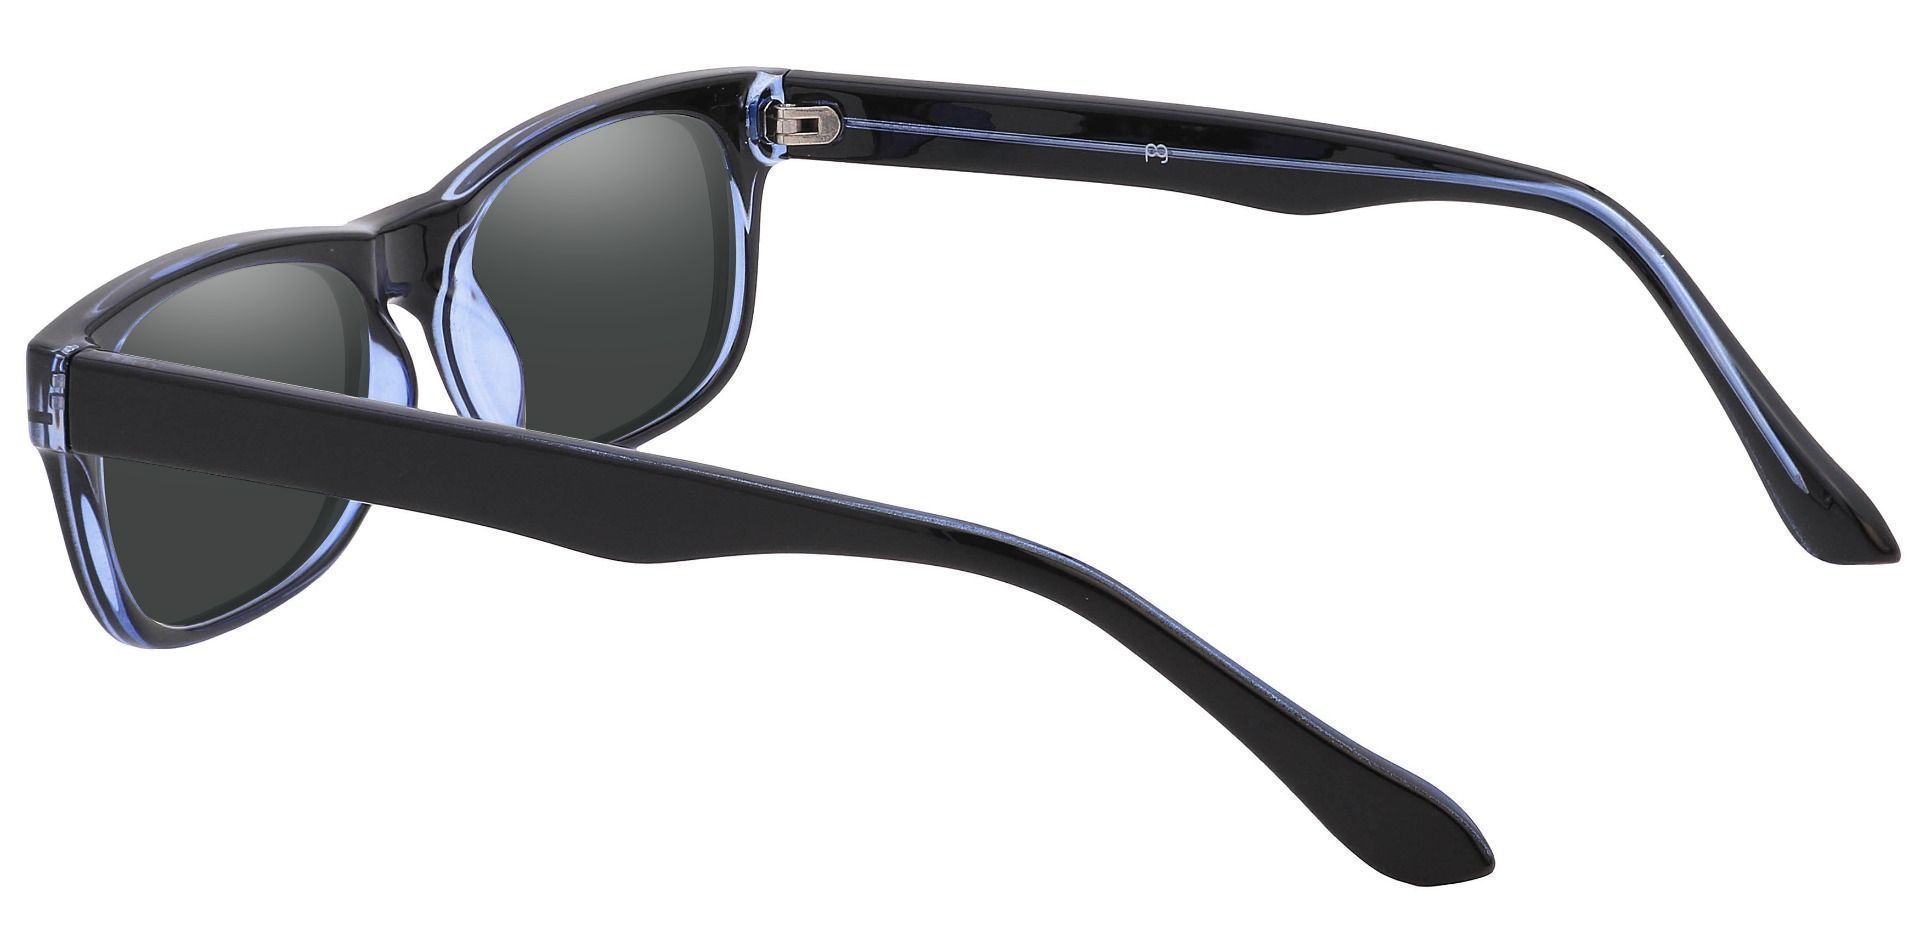 Murphy Rectangle Prescription Sunglasses - Blue Frame With Gray Lenses